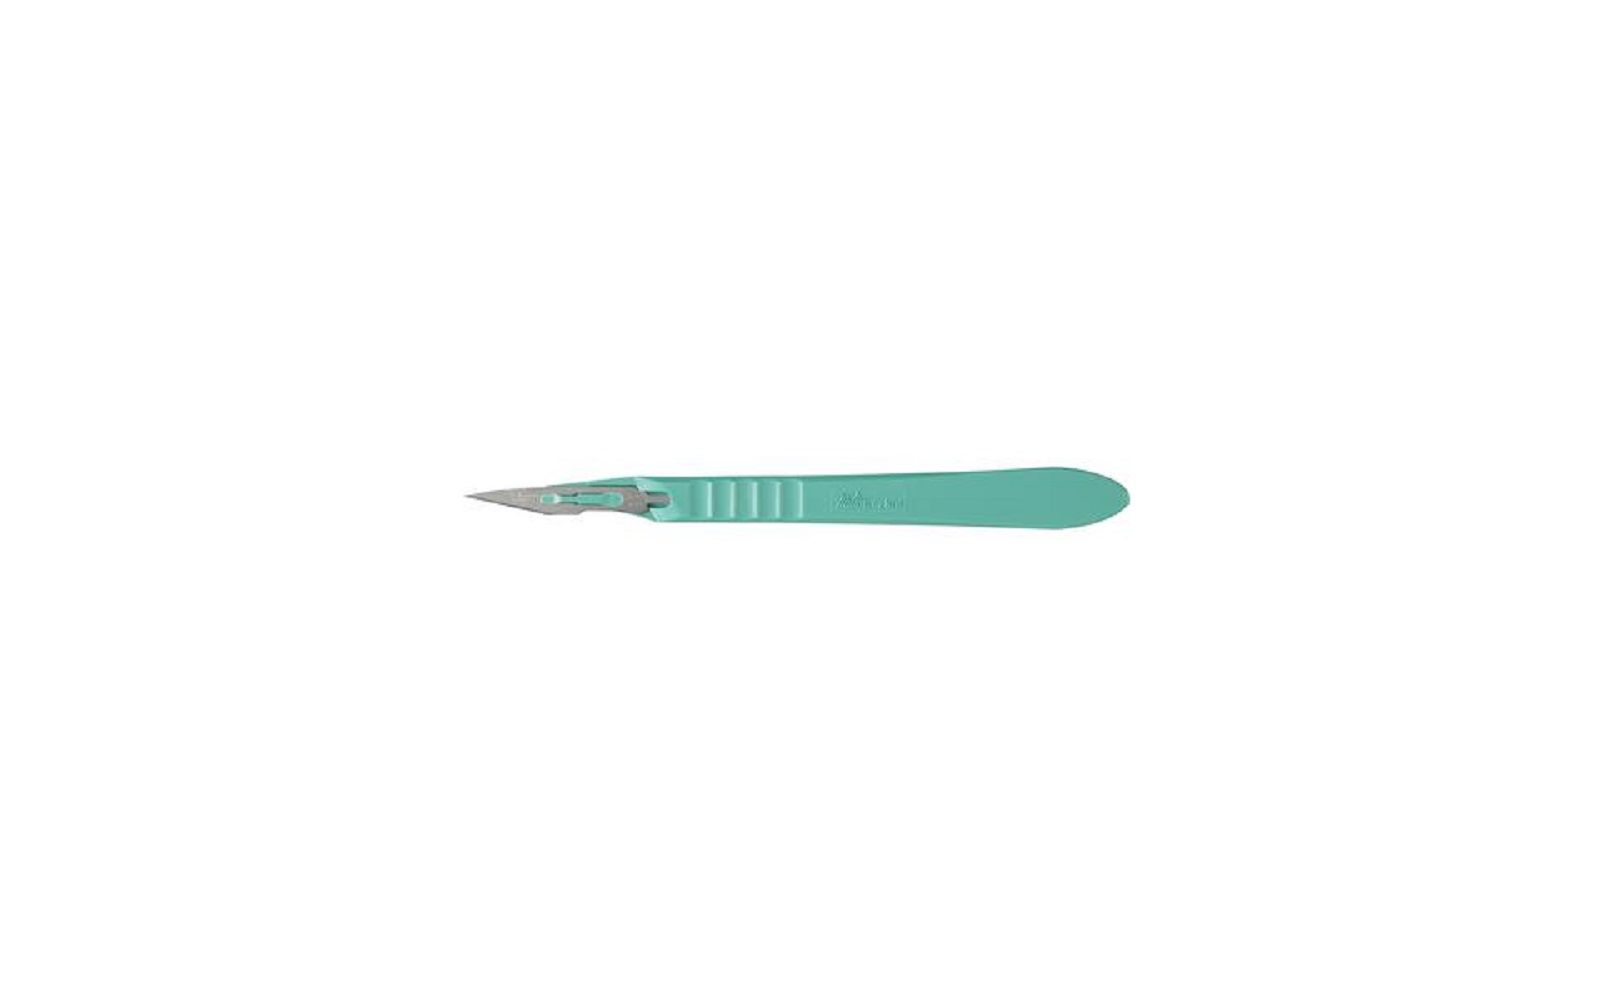 Sterile disposable scalpels – stainless steel, 10/pkg - # 11